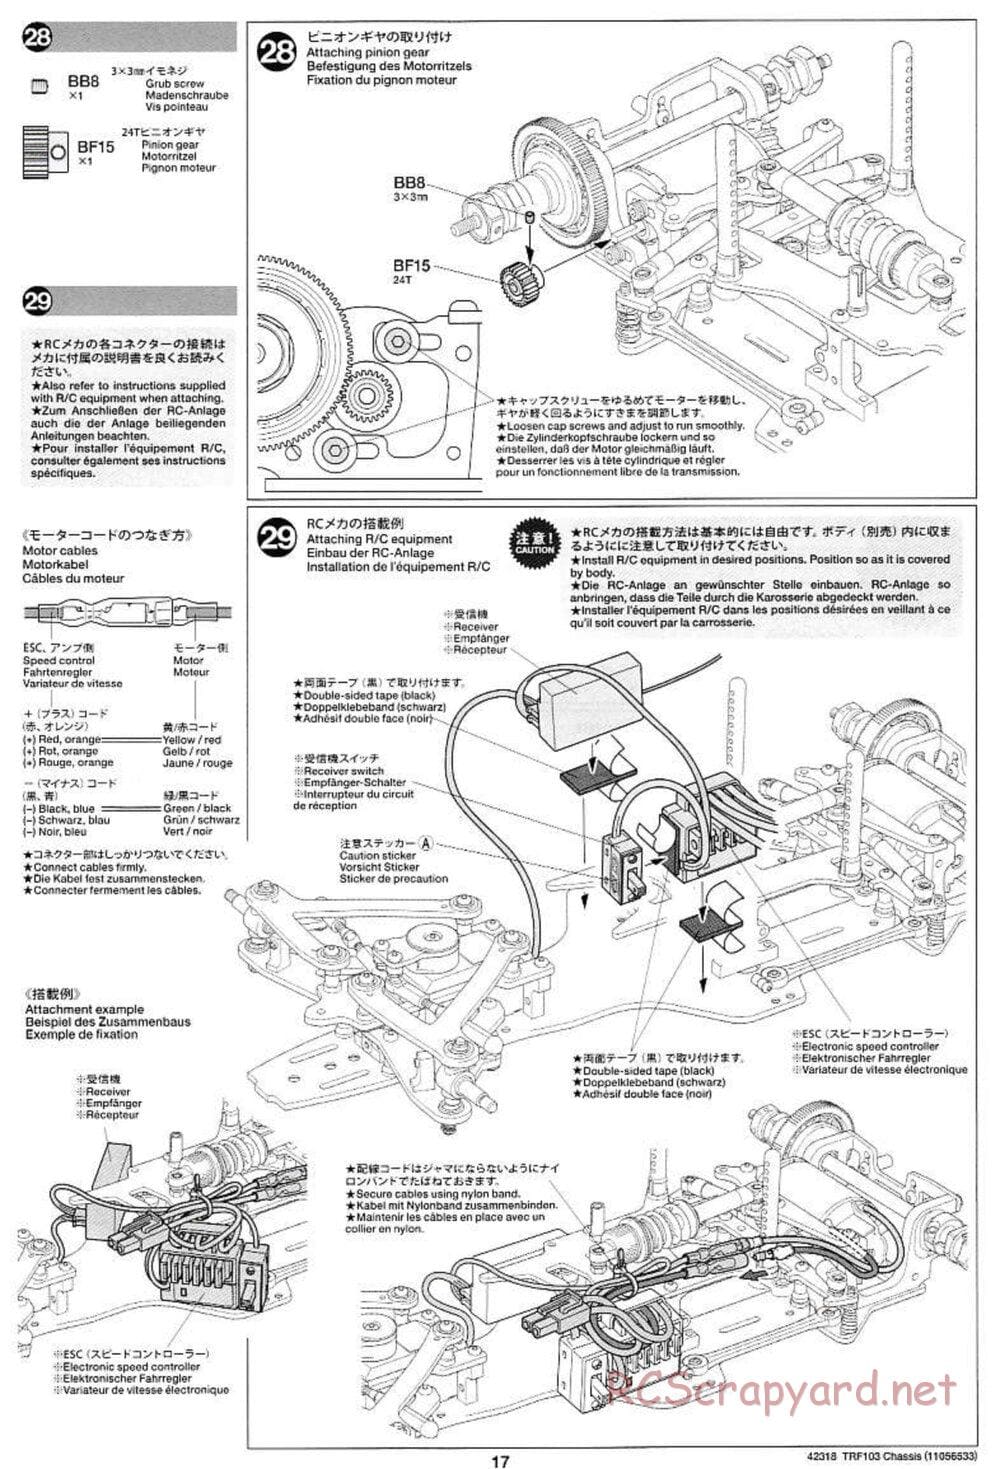 Tamiya - TRF103 Chassis - Manual - Page 17